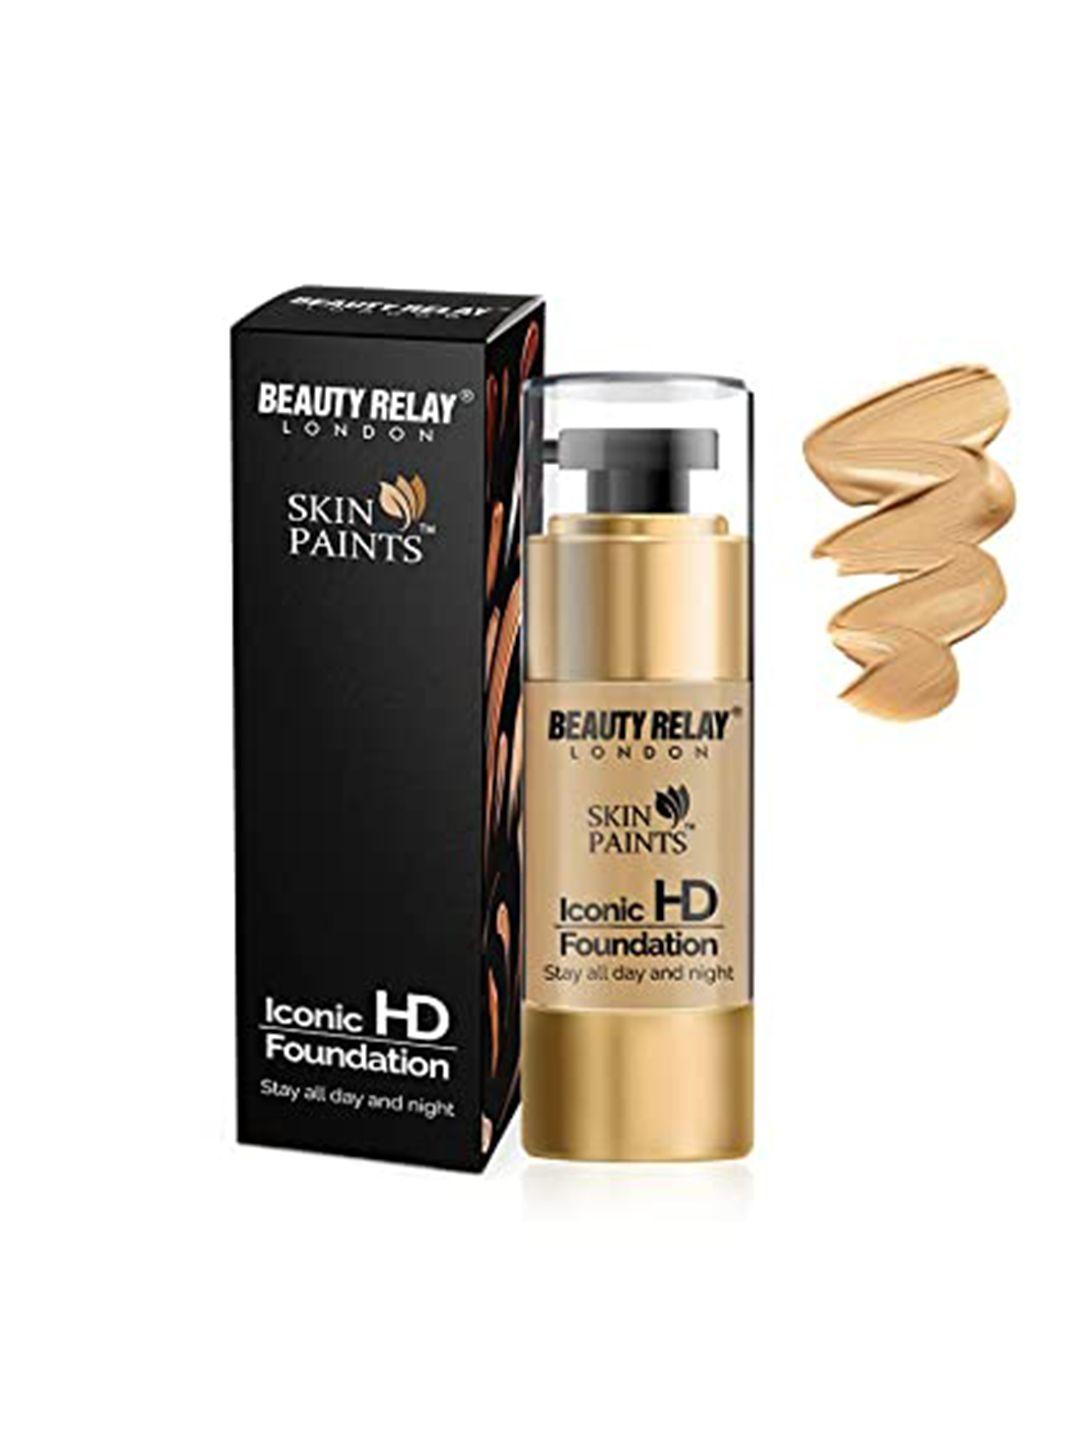 beautyrelay london skin paints iconic hd foundation 30ml - soft tan 228